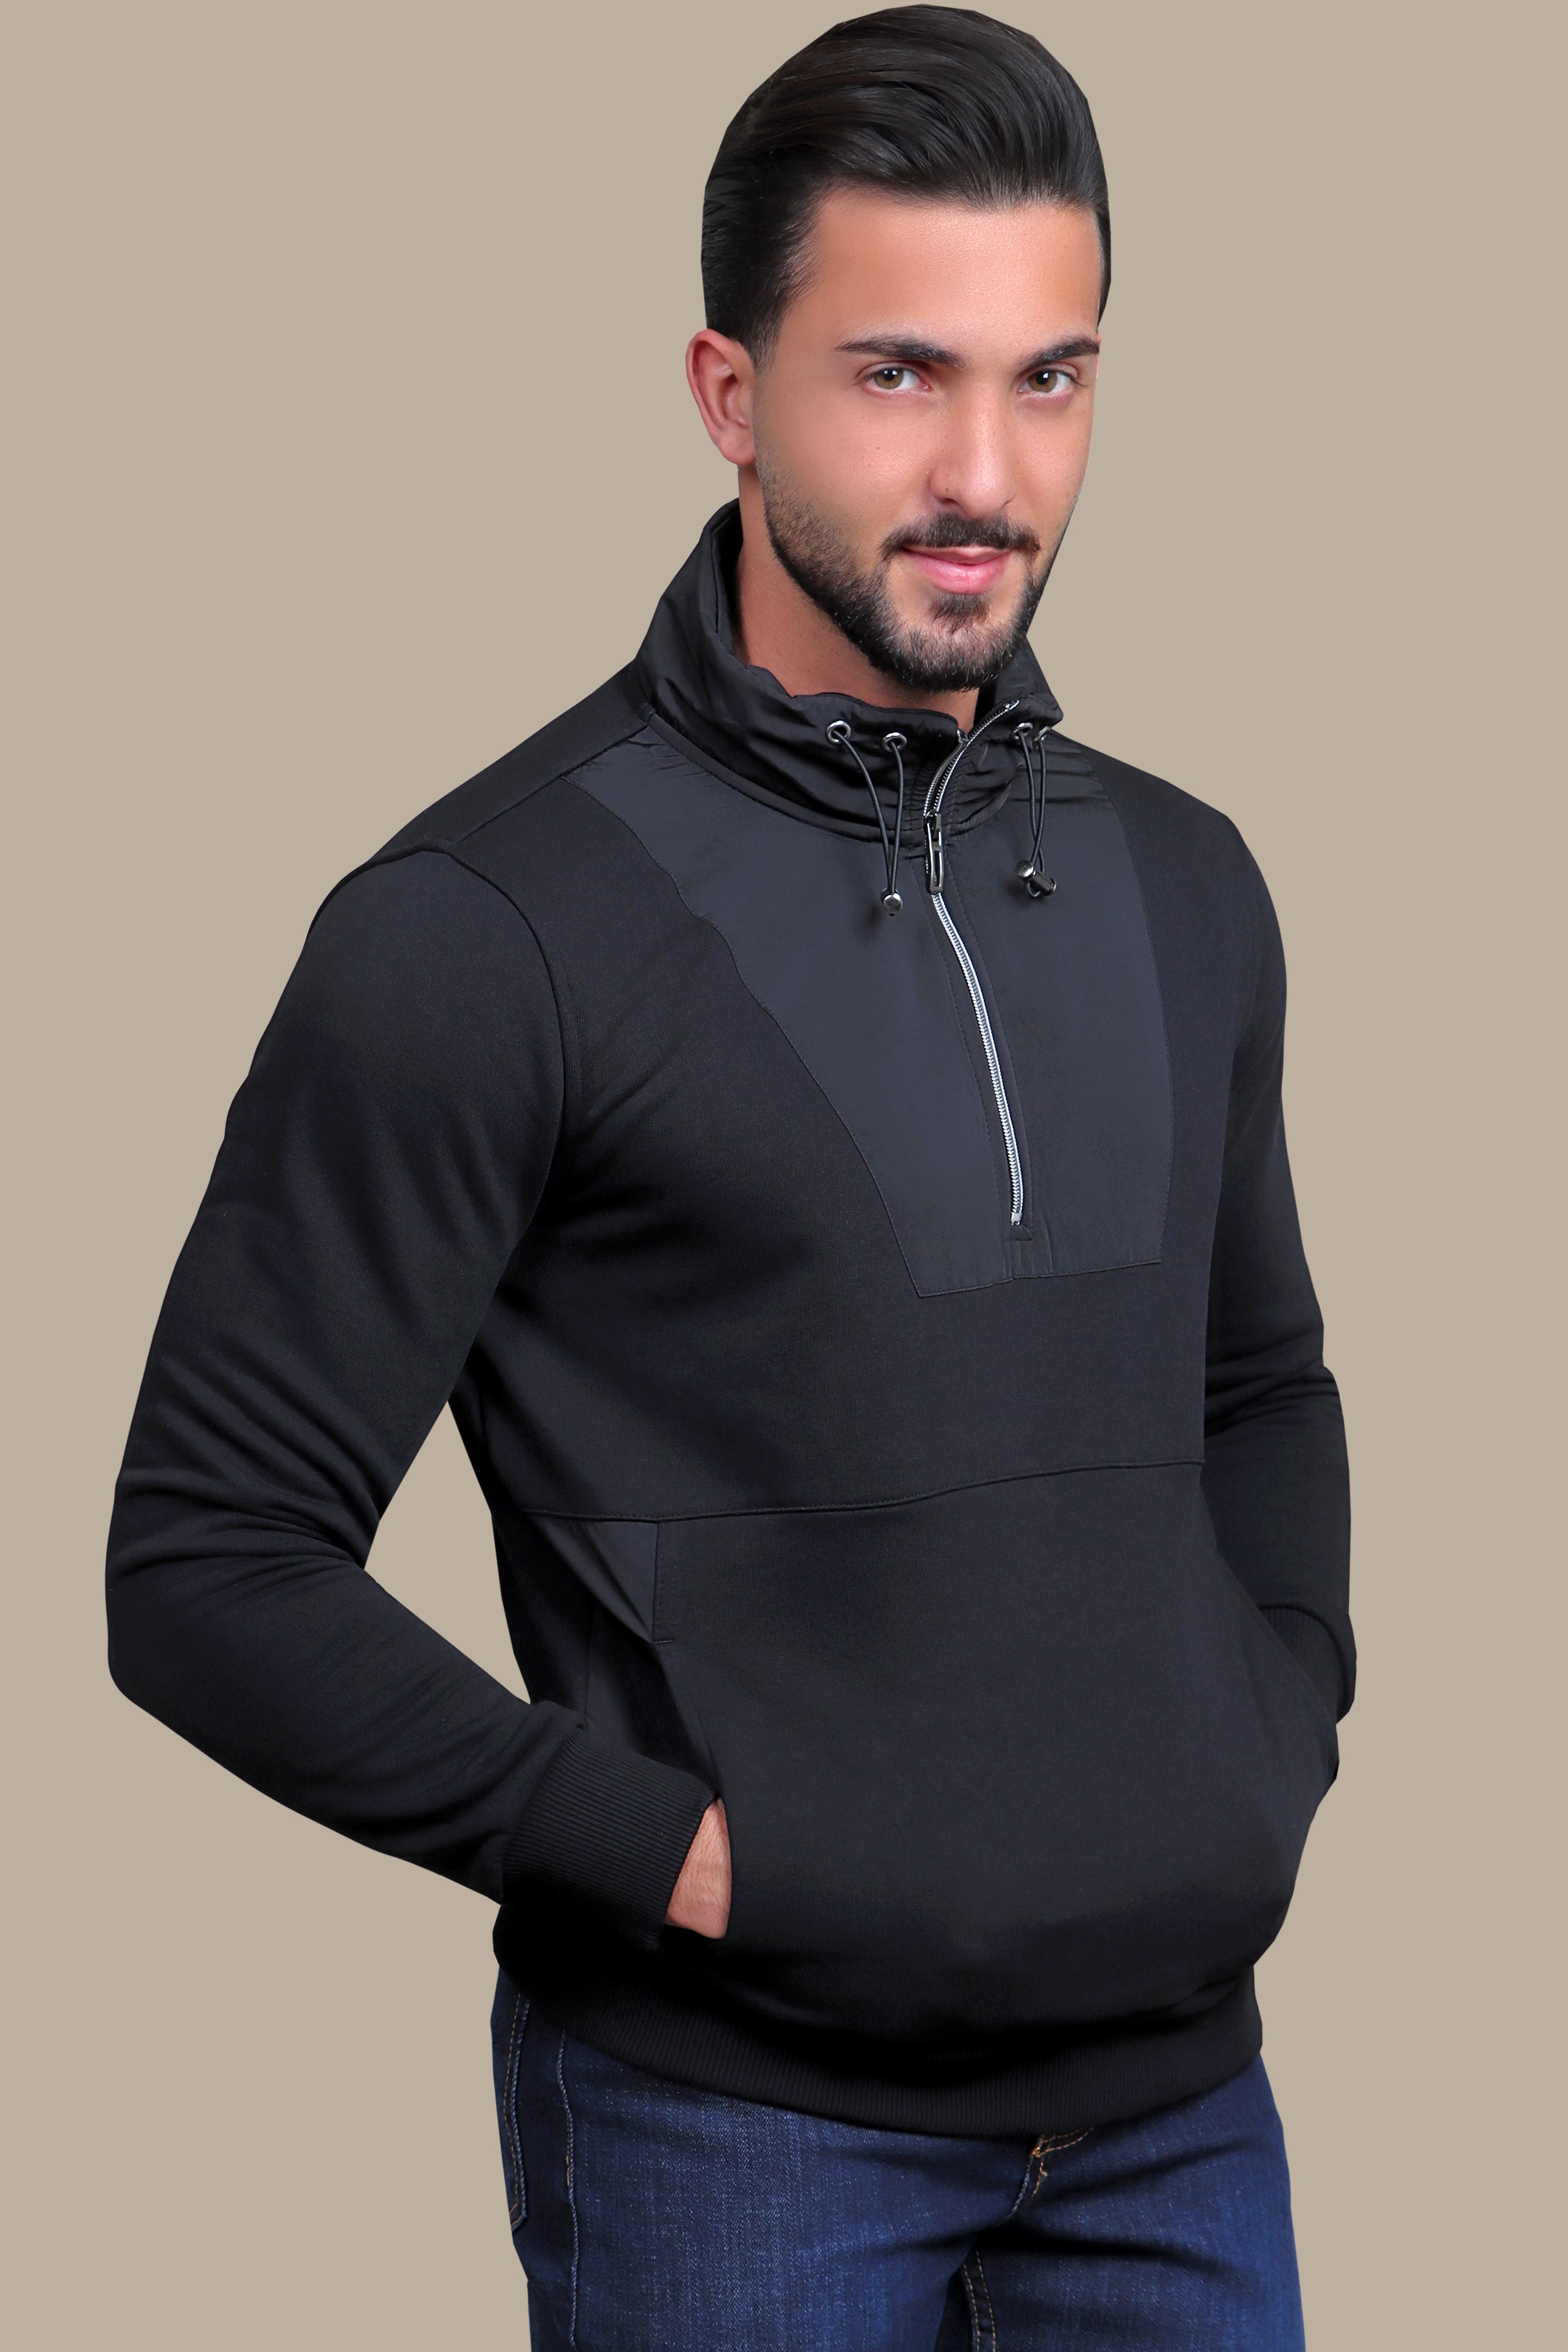 Urban Fusion: Black Half-Zip Sweatshirt with Mixed Fabric